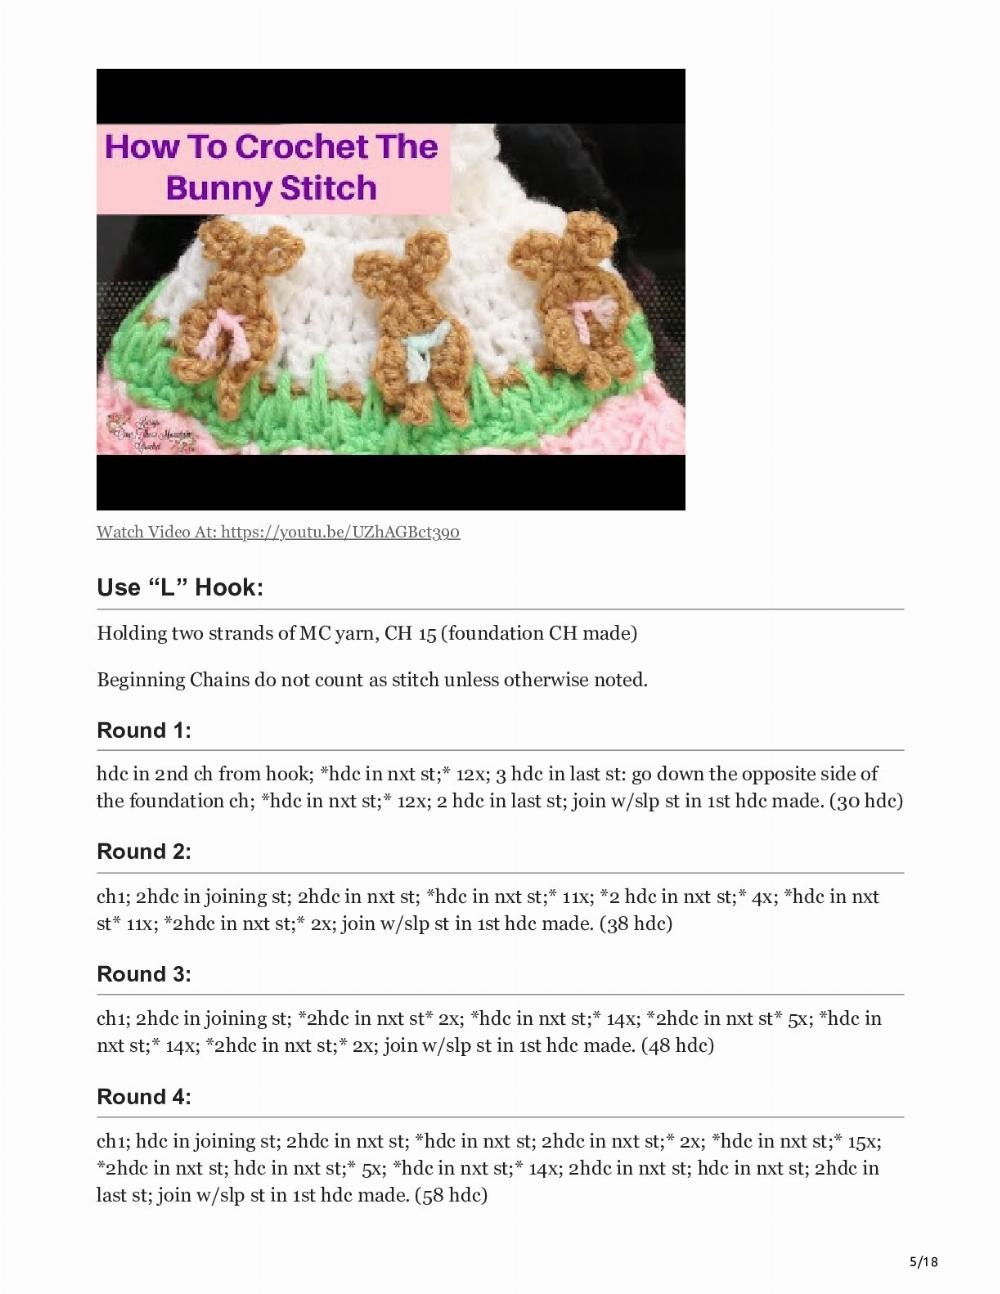 Bunny Stitch Moses Basket – Free Crochet Pattern